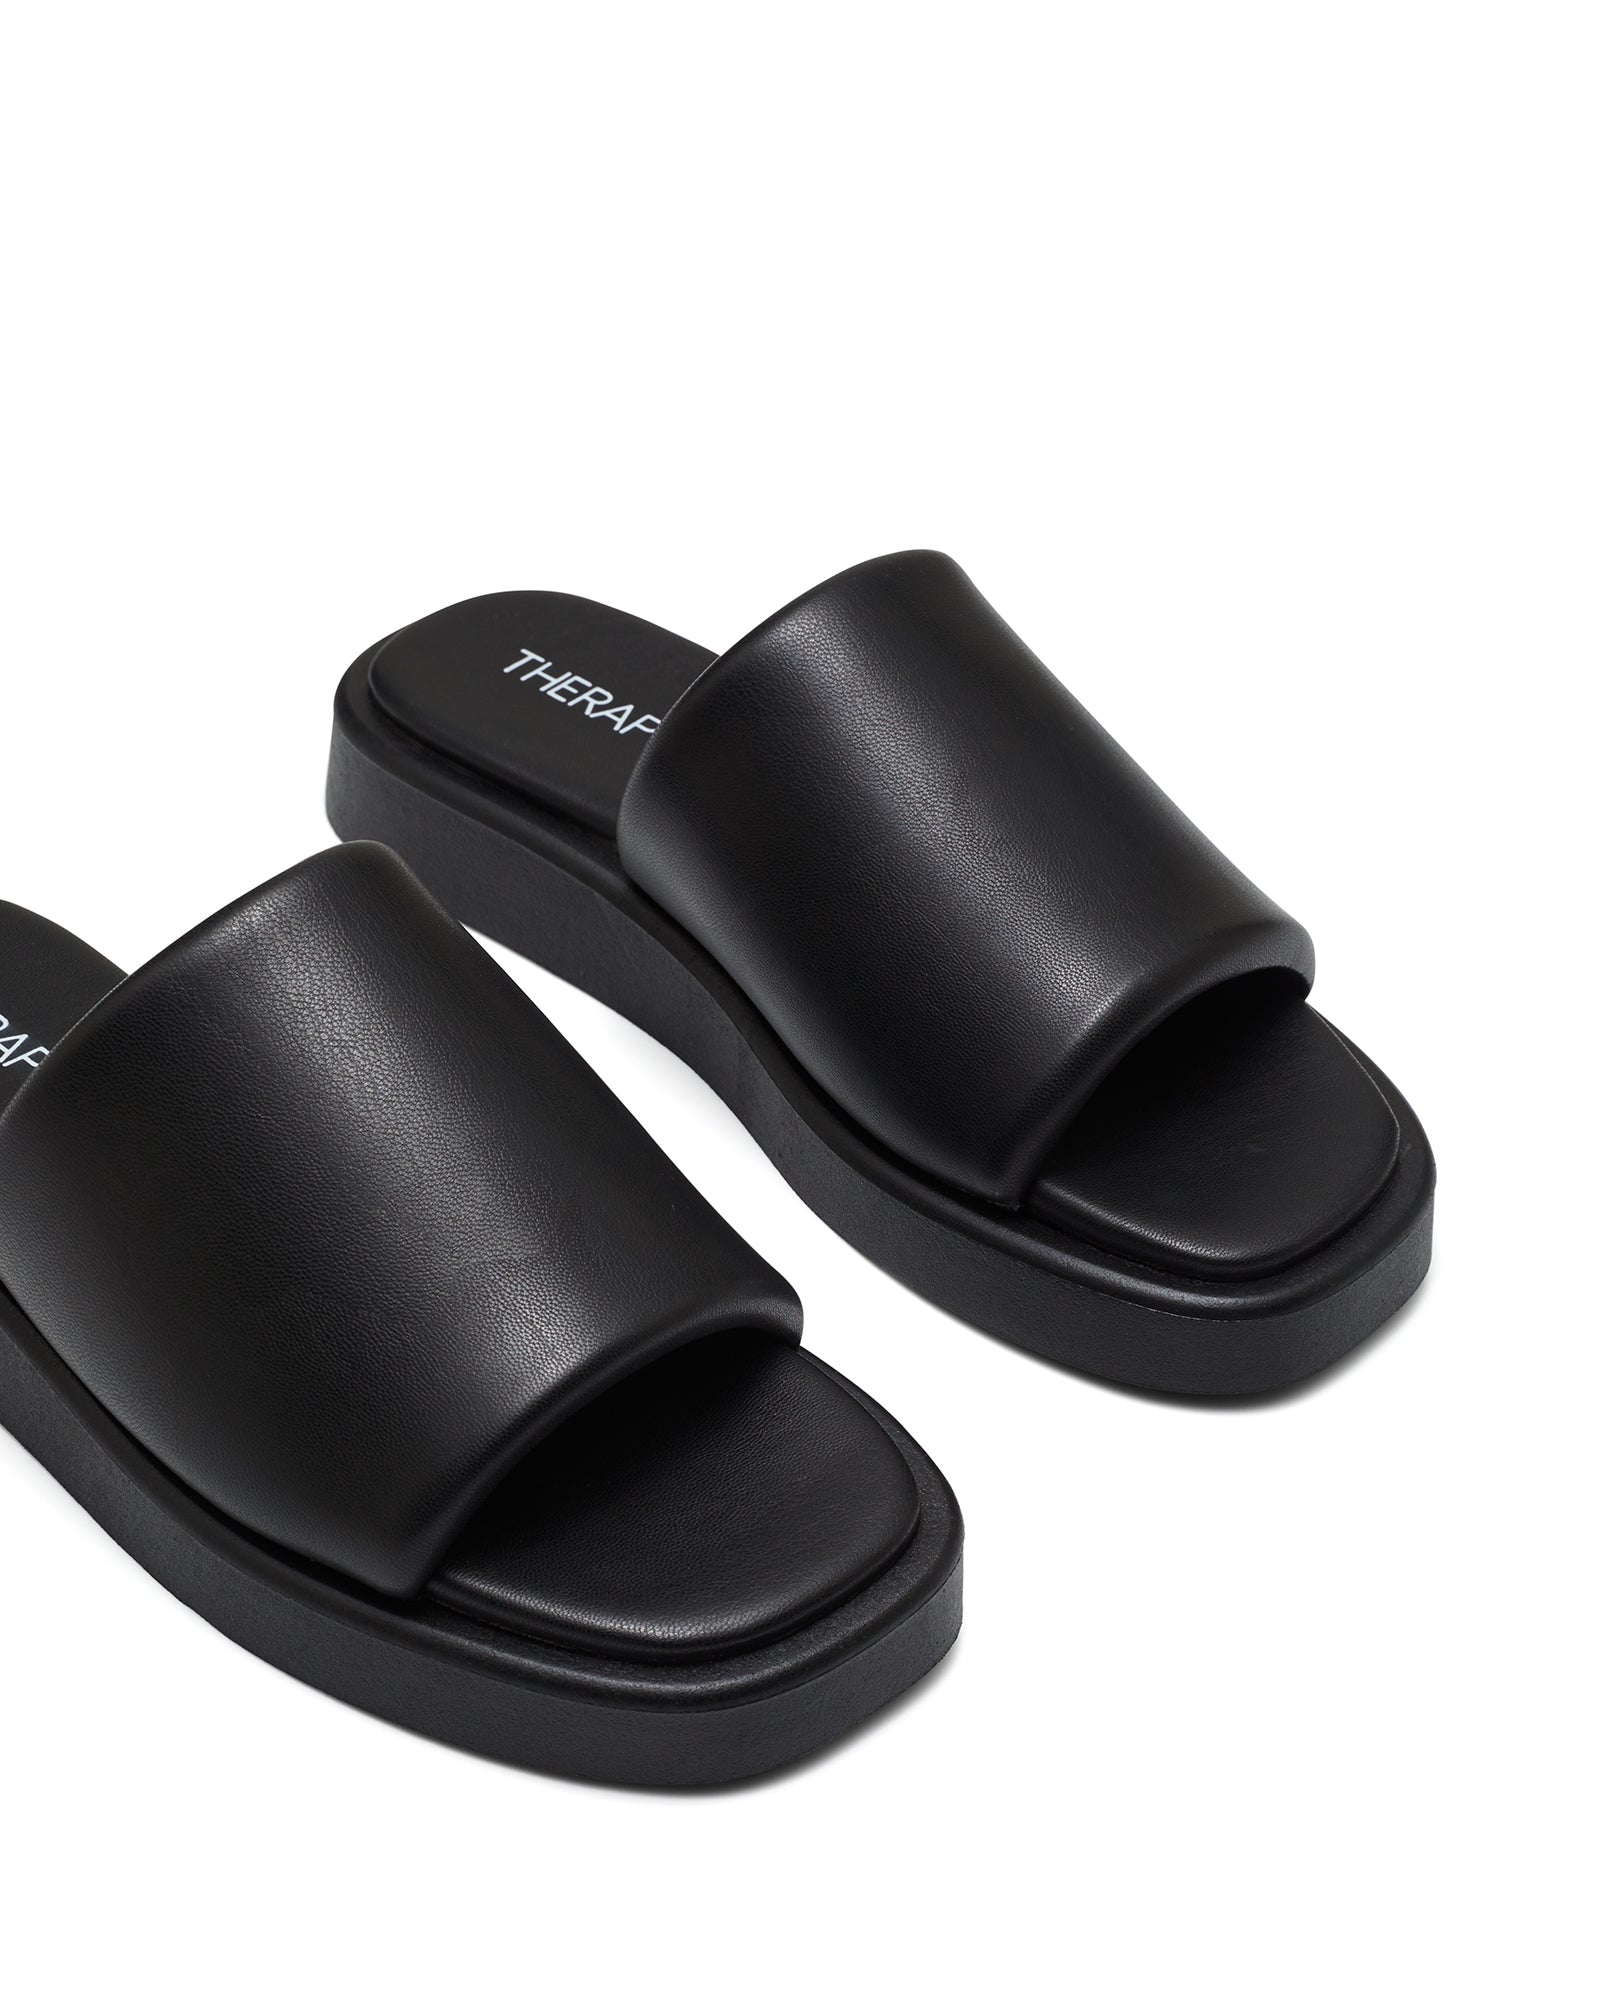 Therapy Shoes Puffy Black | Women's Sandals | Slides | Platform | Flatform